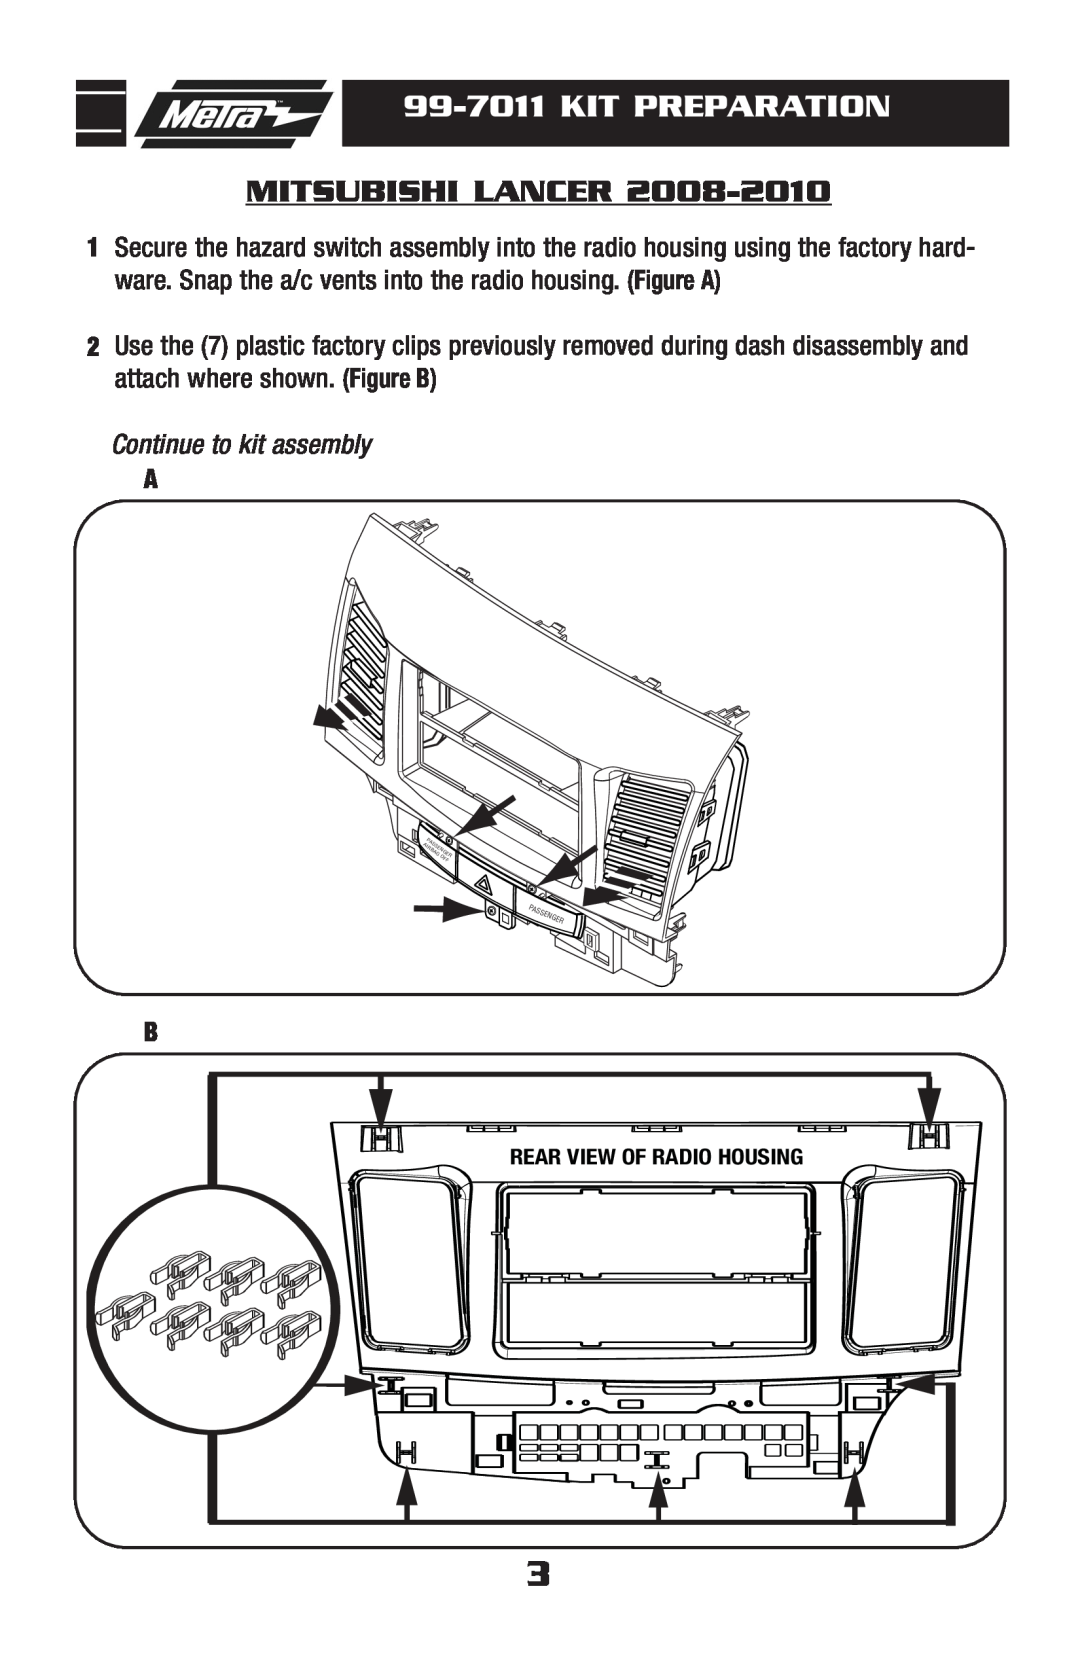 Metra Electronics installation instructions 99-7011KIT PREPARATION, Mitsubishi Lancer, Continue to kit assembly 